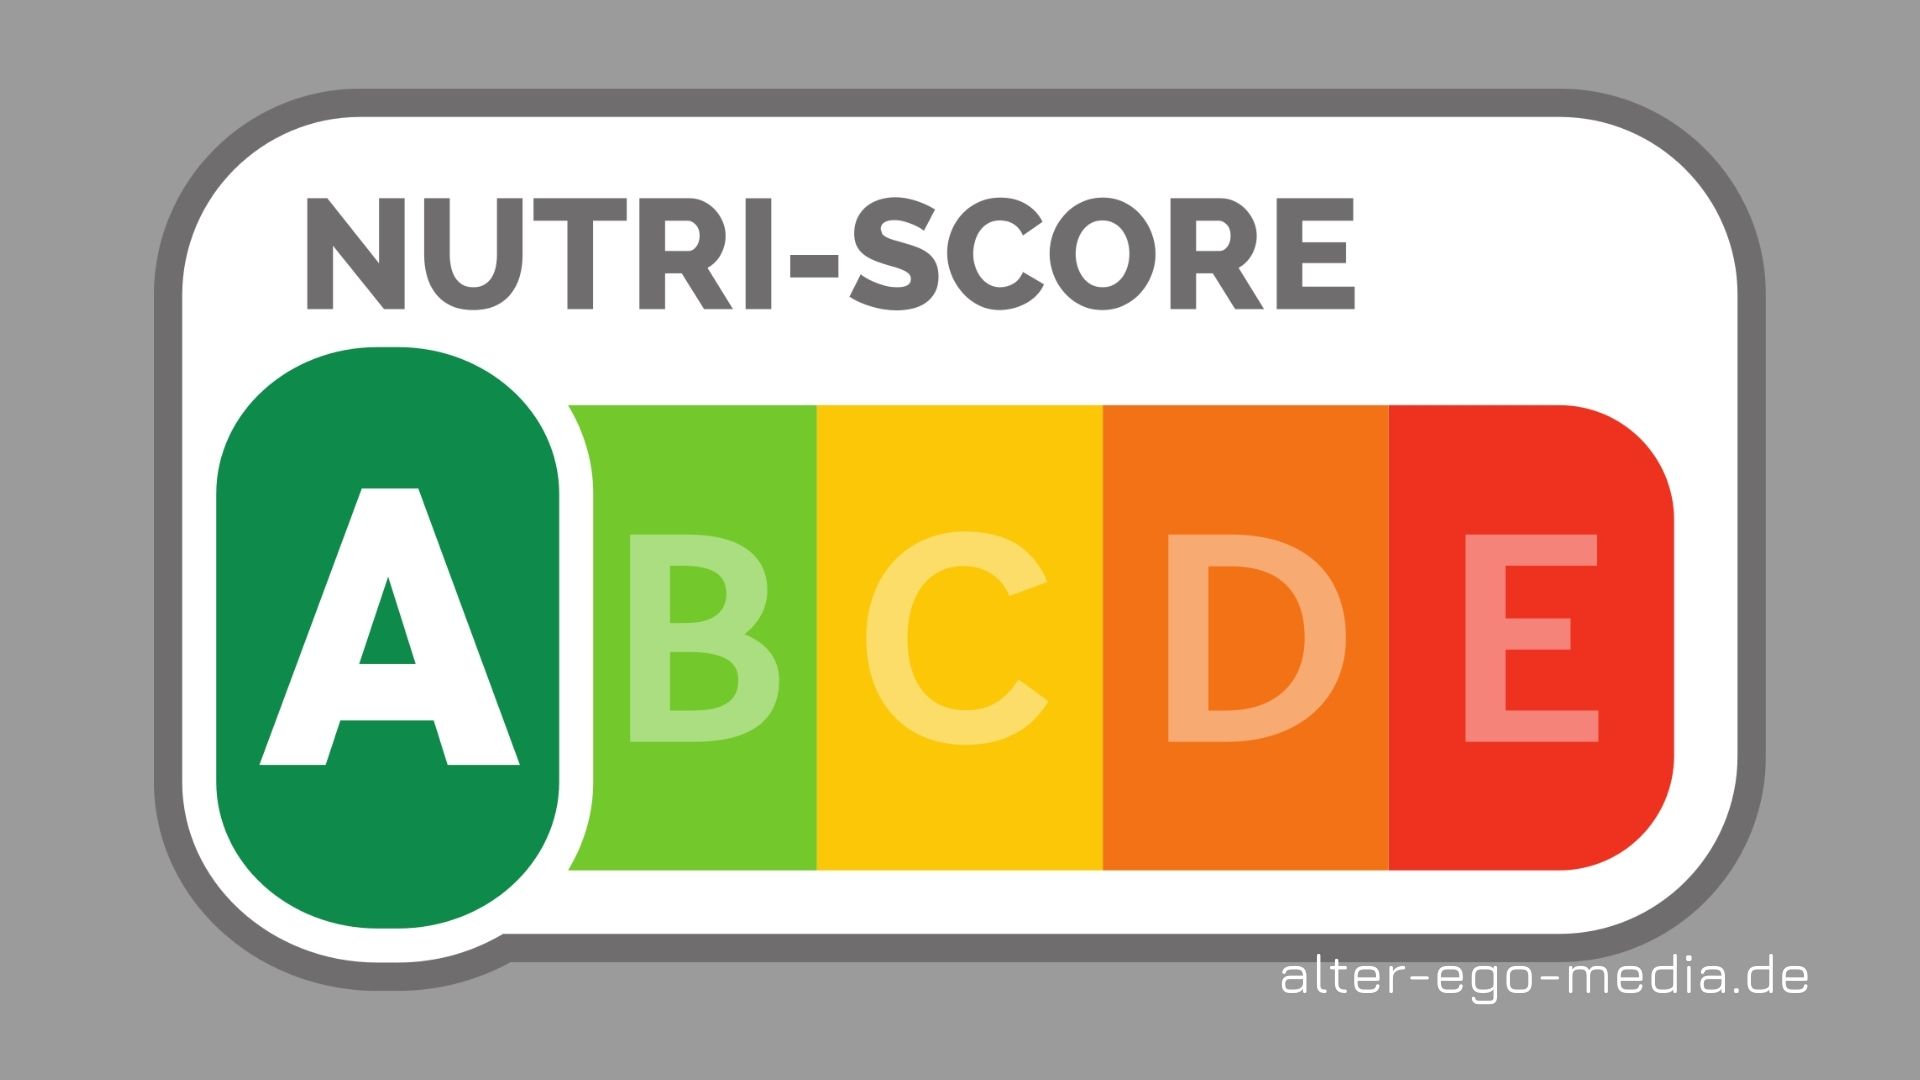 Знак пищевой ценности Nutri-Score